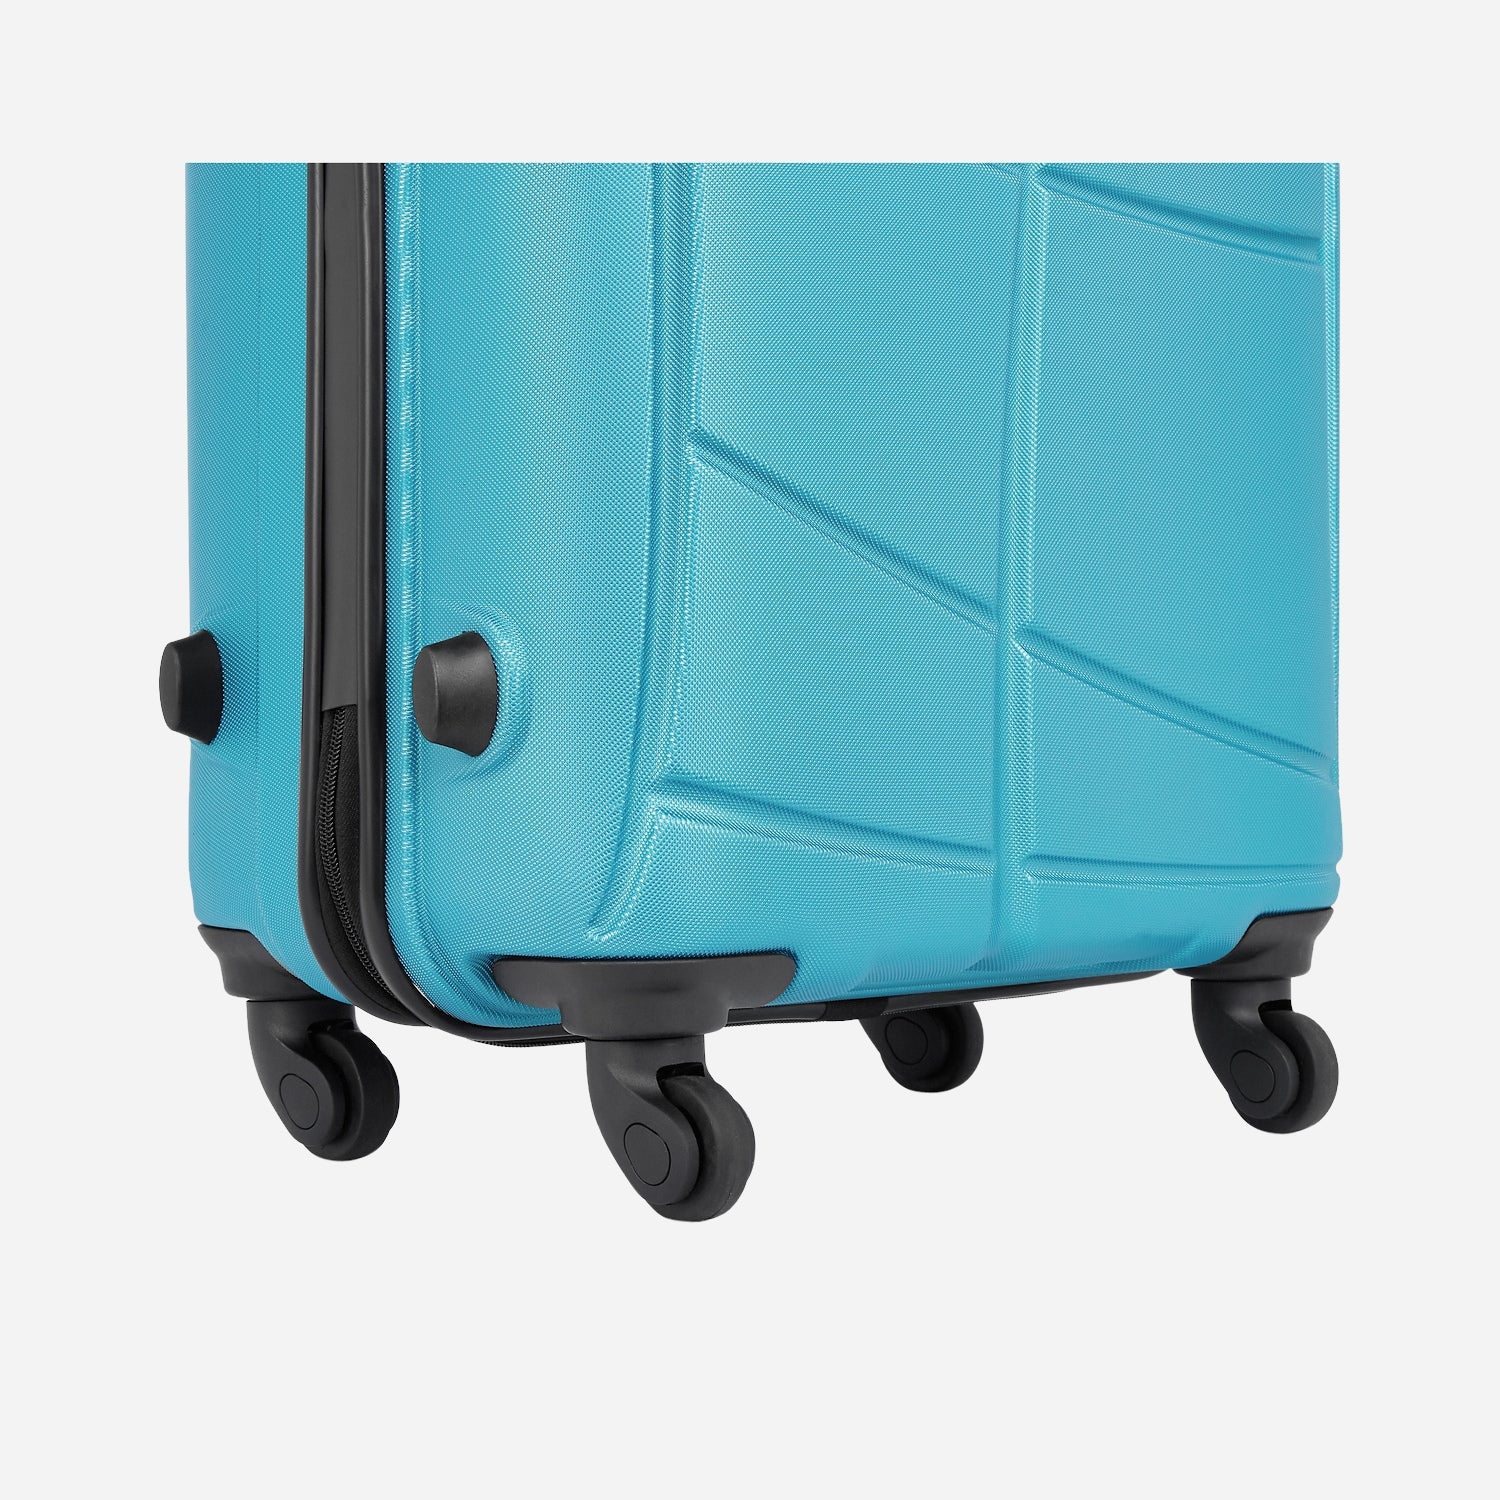 Safari Vibe Electric Teal 65cm Trolley Bag with 360° Wheels